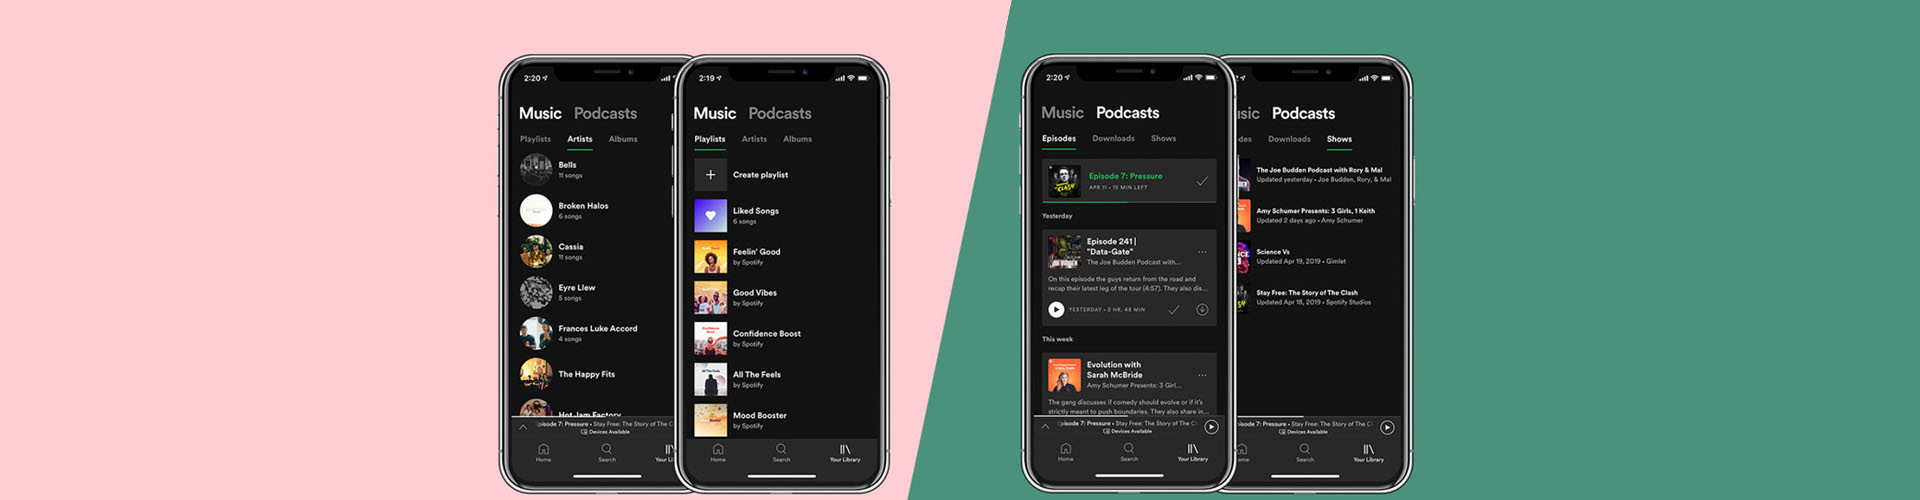 Spotify mobile app